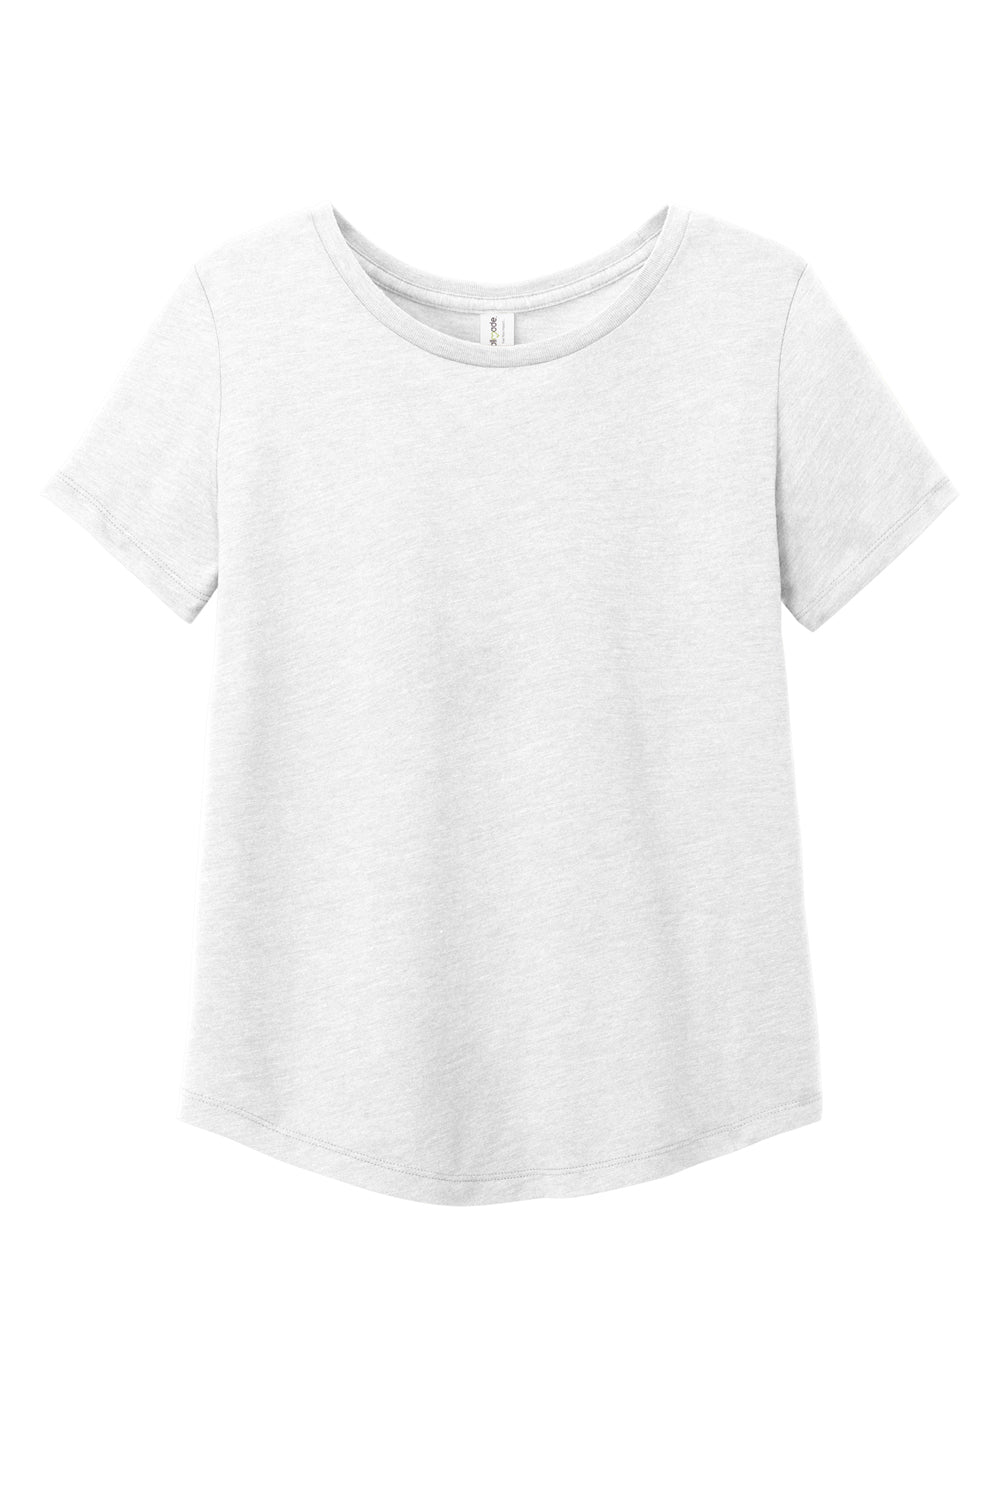 Allmade AL2015 Womens Short Sleeve Scoop Neck T Shirt Fairly White Flat Front